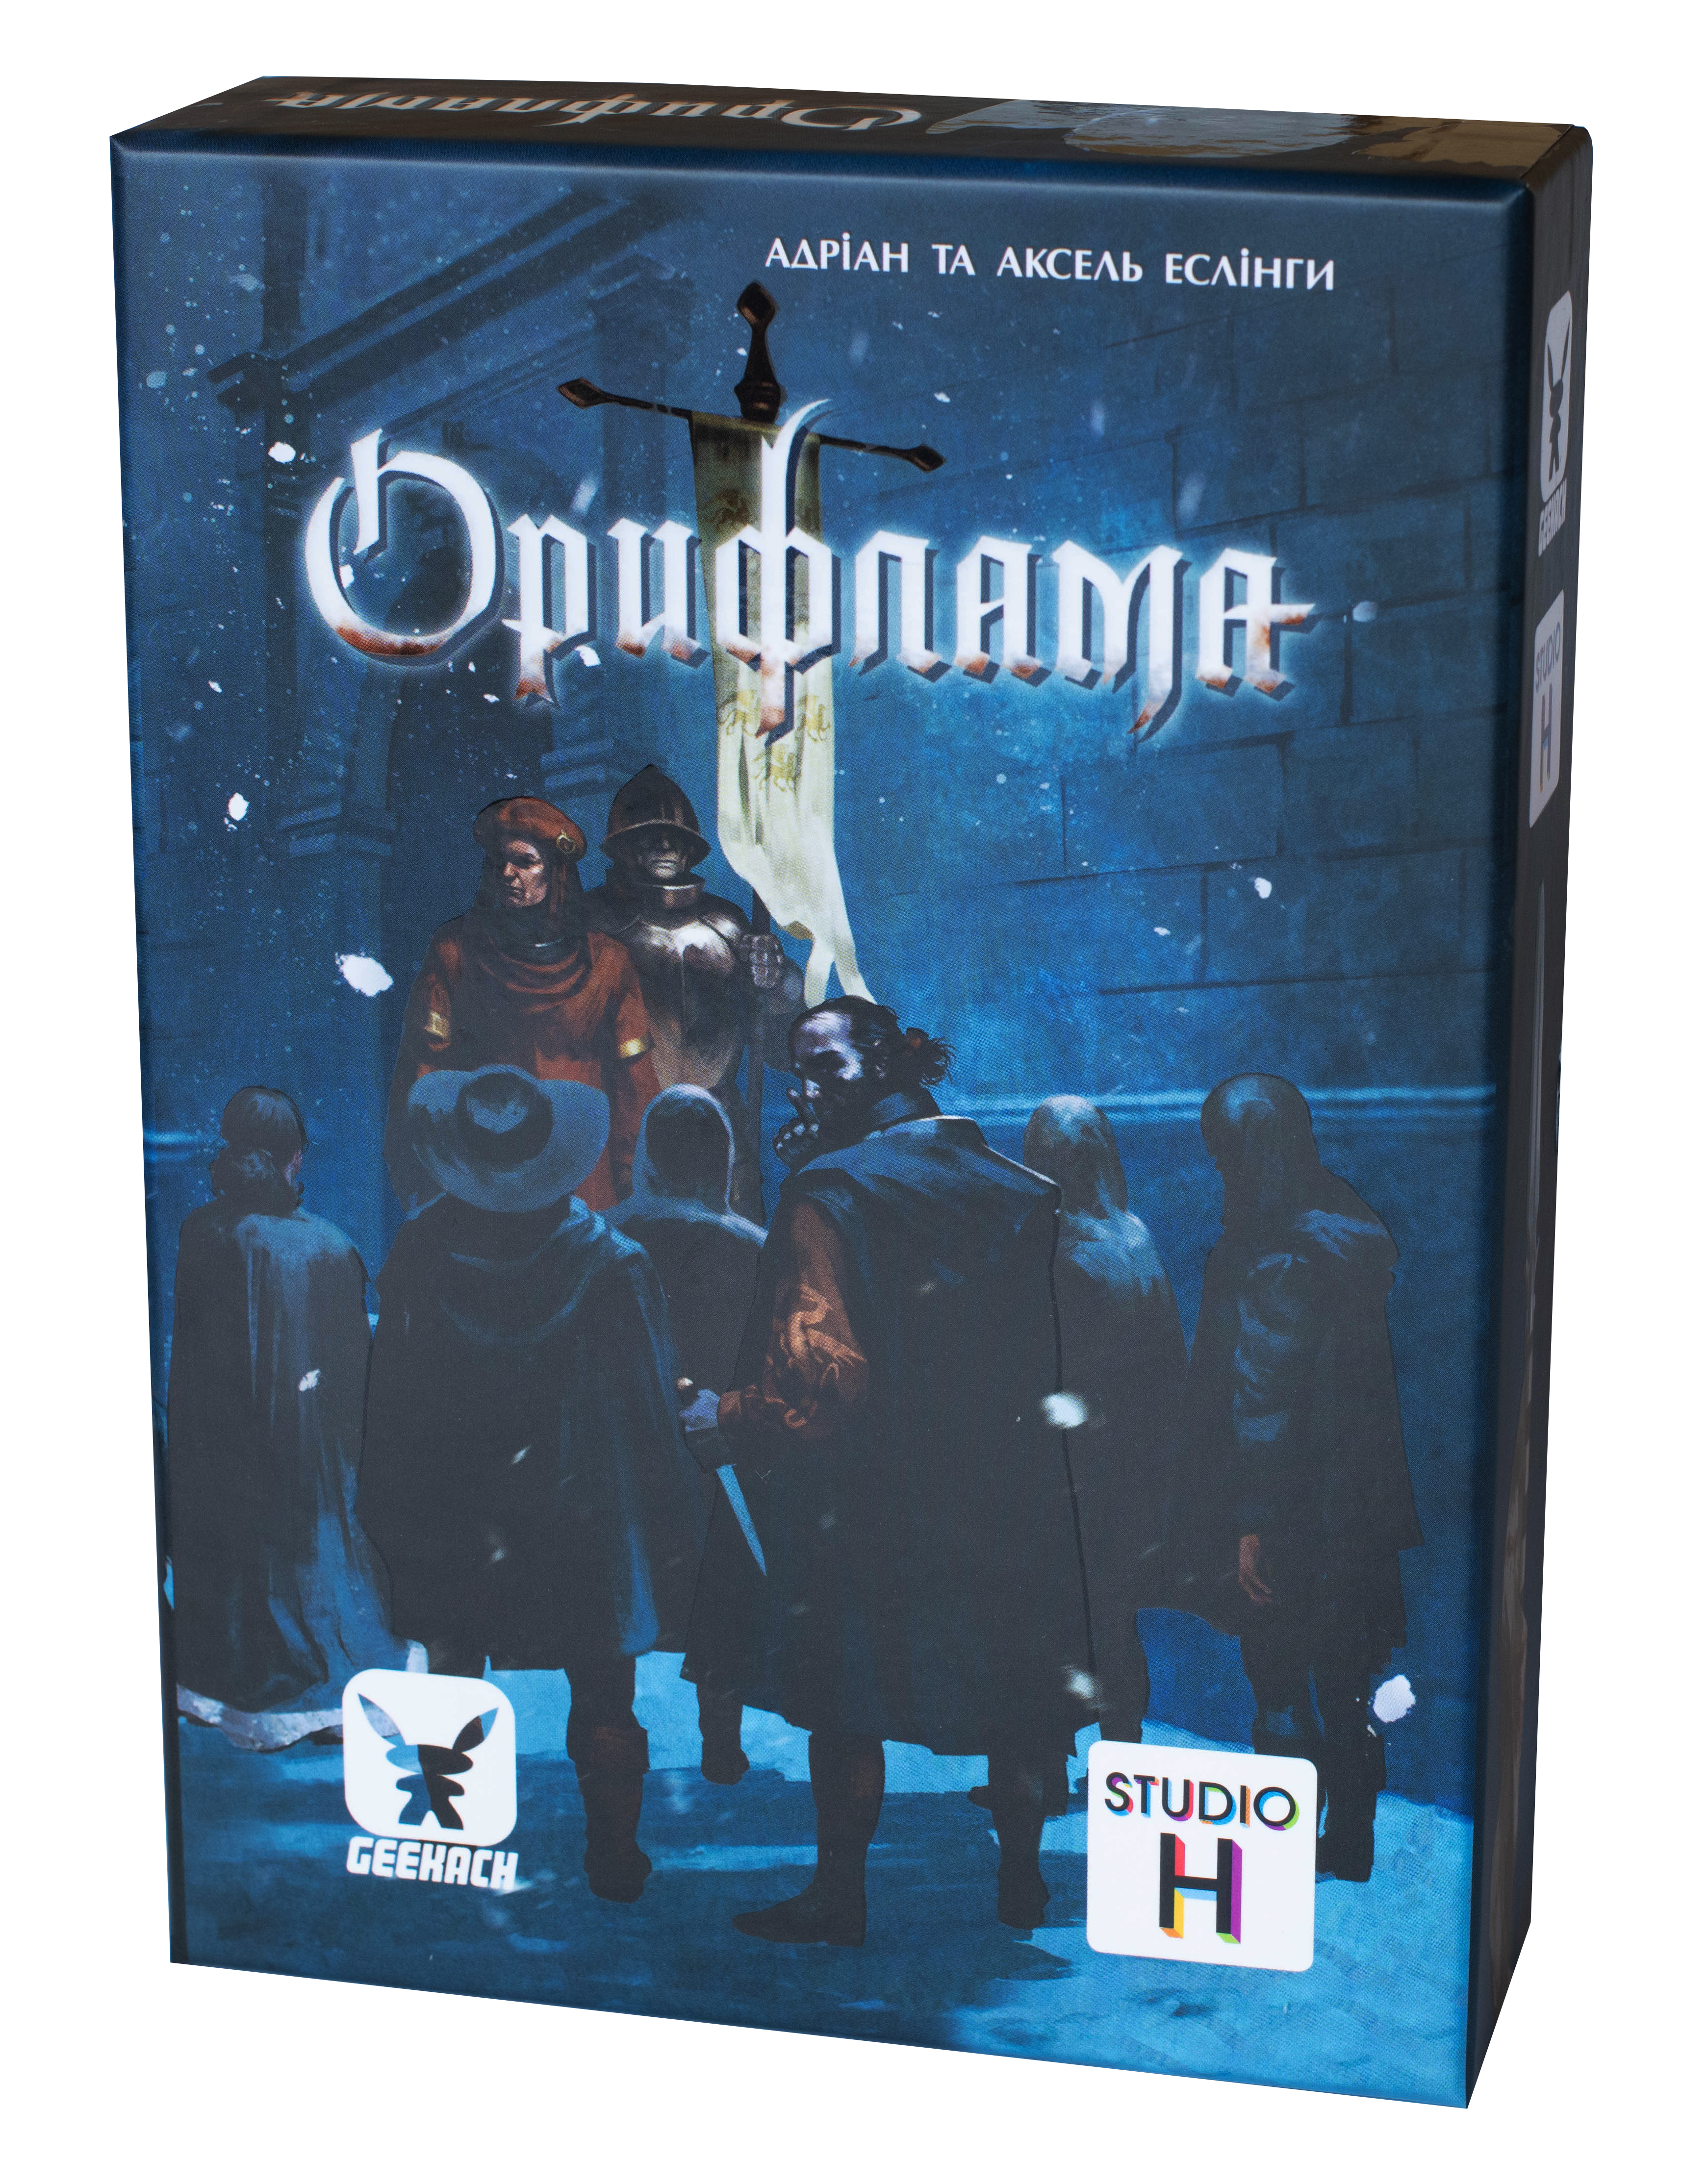 Коробка настольной игры Орифлама